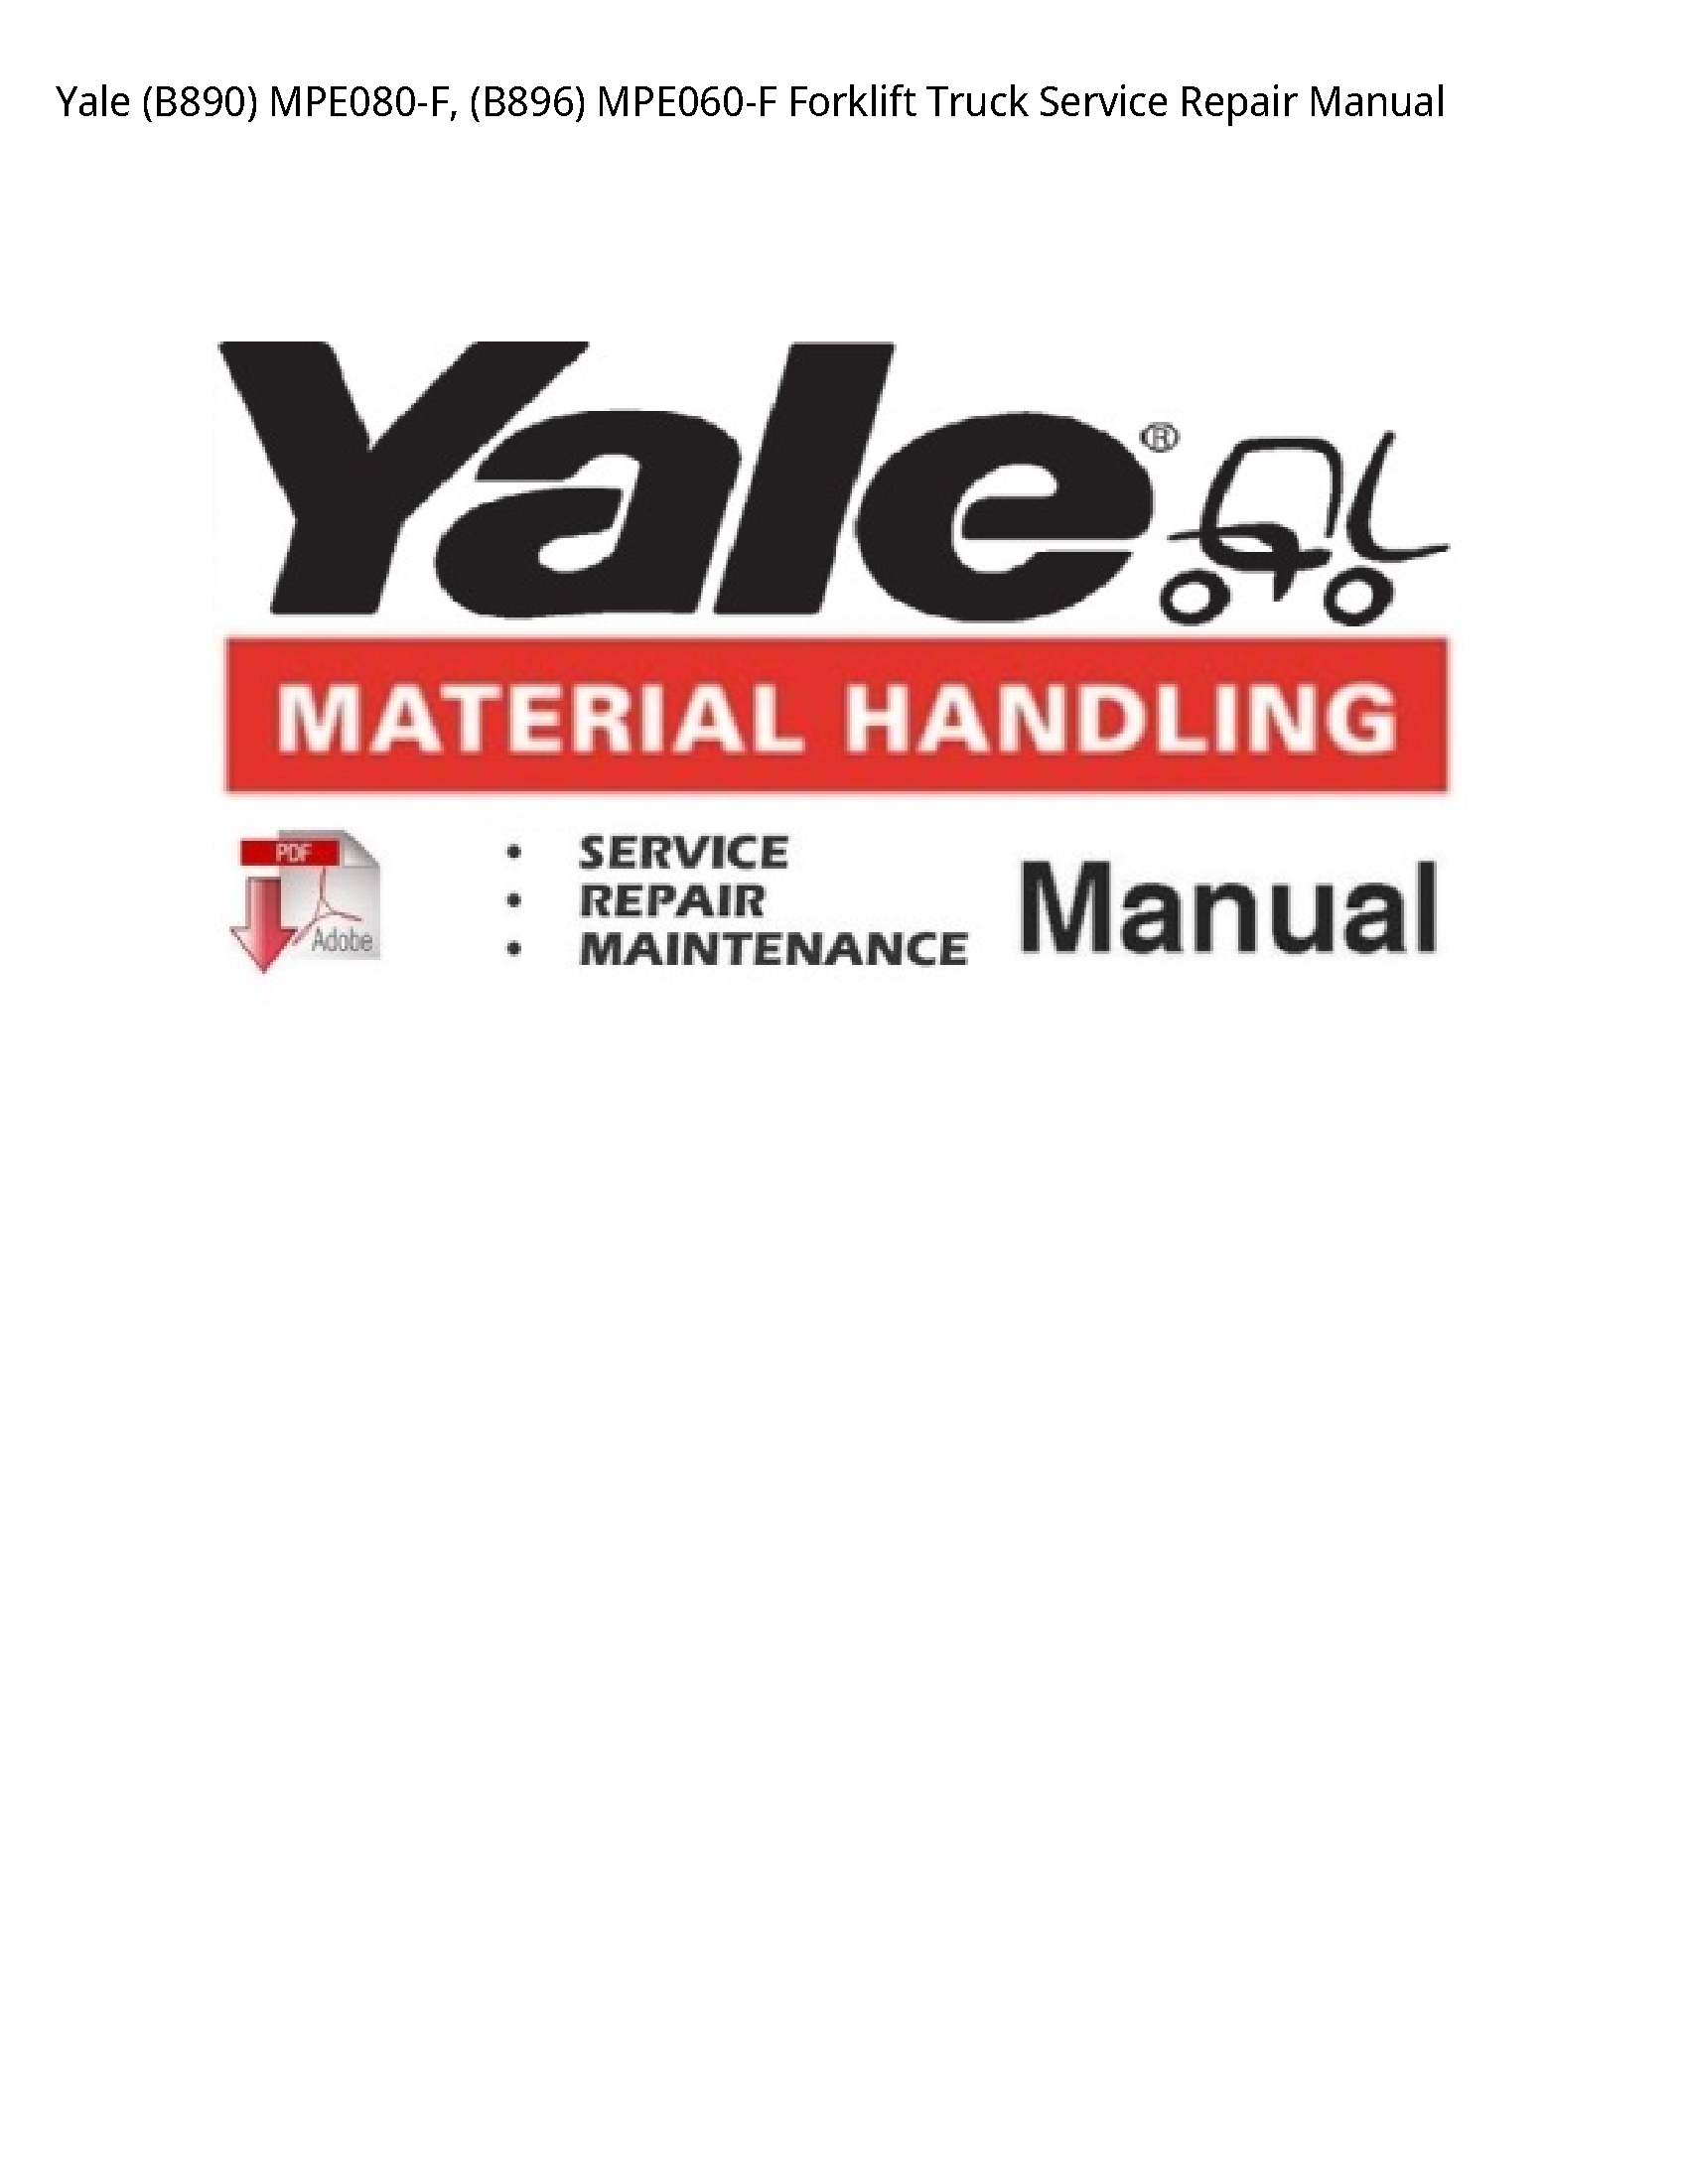 Yale (B890) Forklift Truck manual